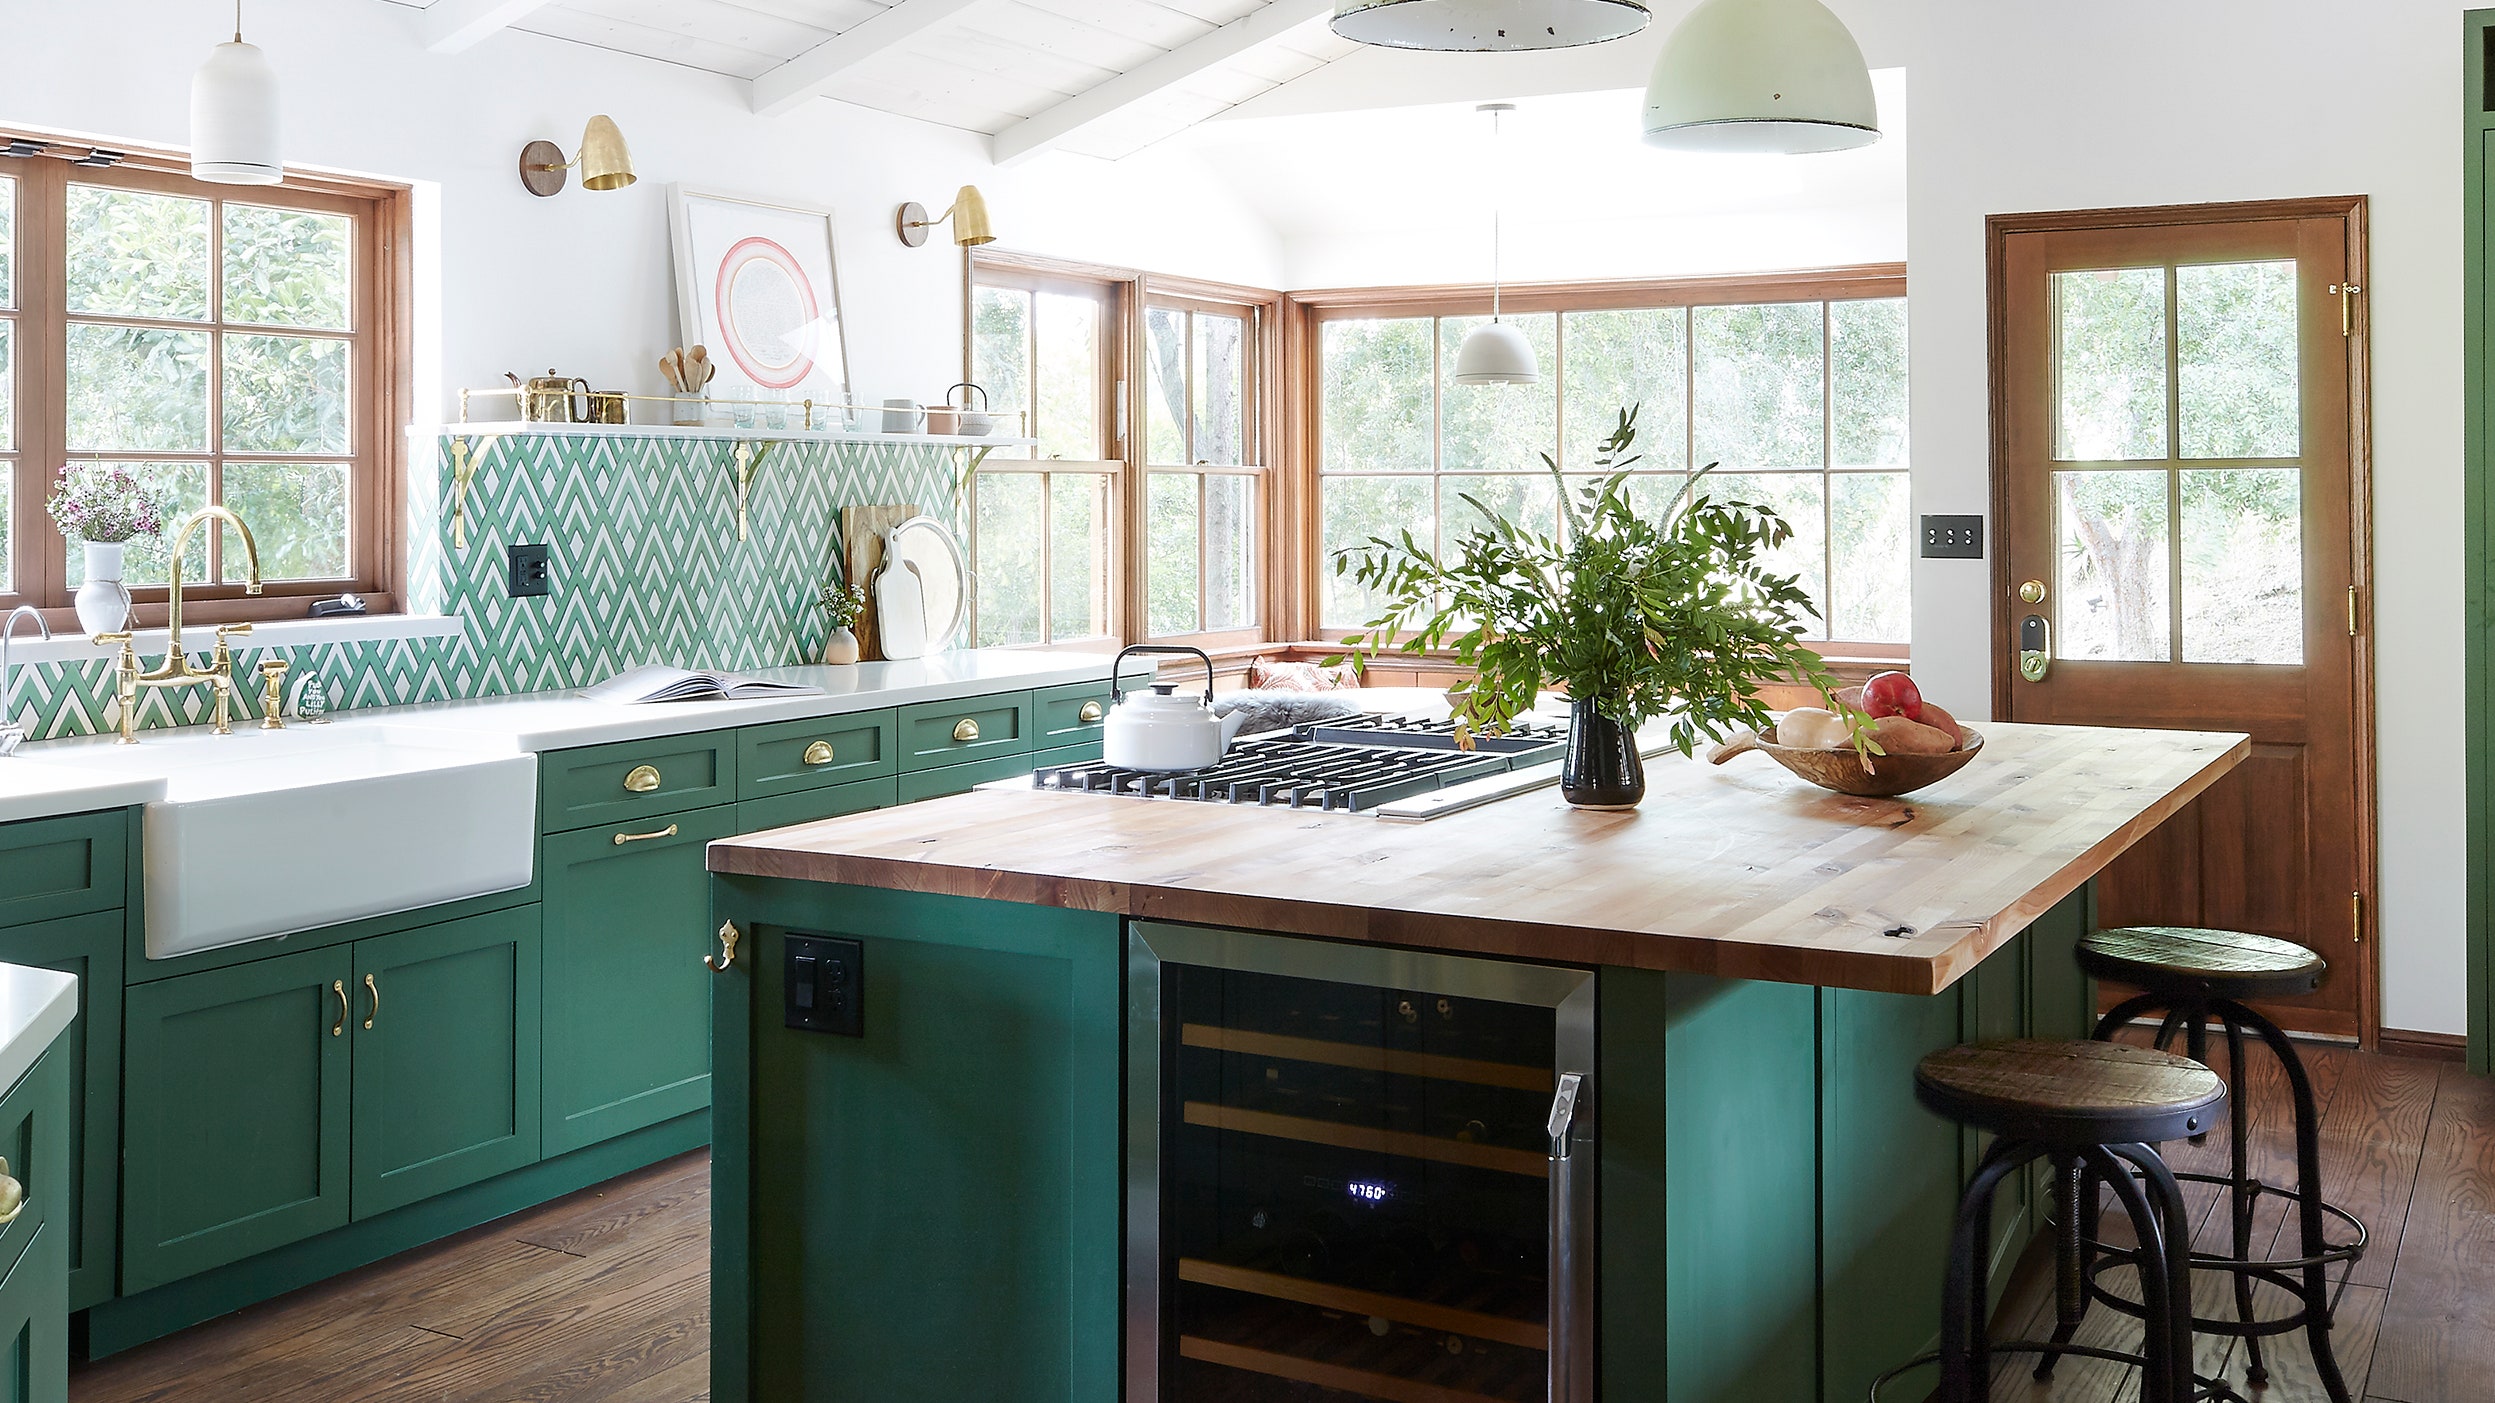 A bold green kitchen - a vibrant and inspiring interior